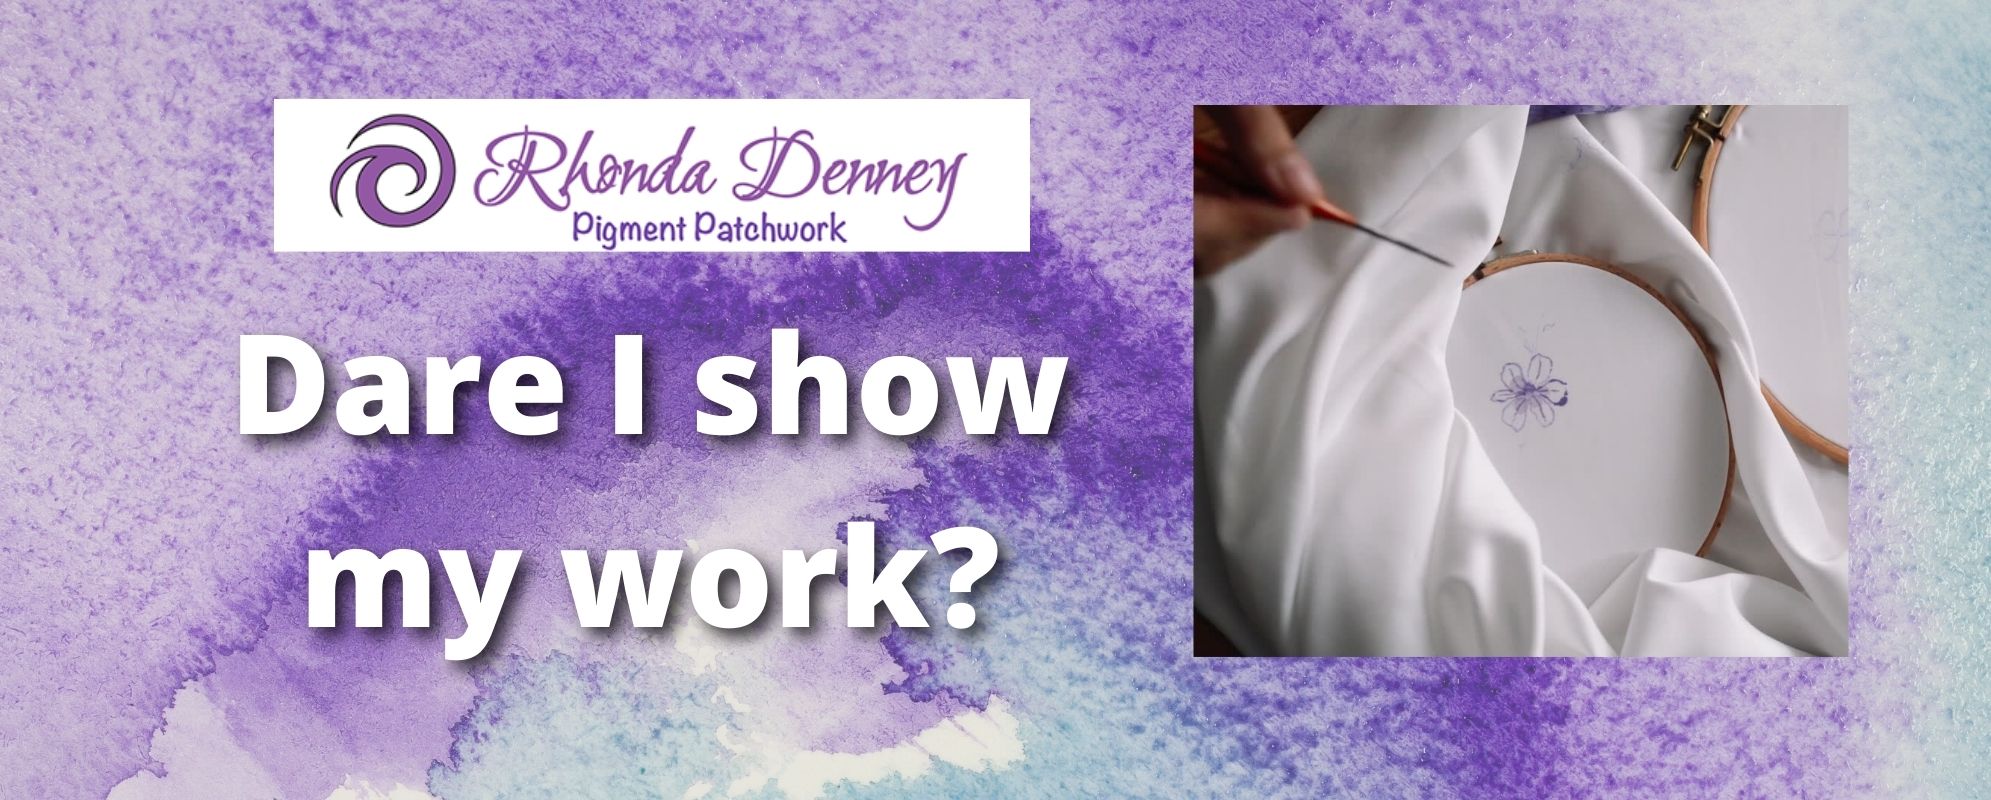 Rhonda Denney - Dare I Show My Work?